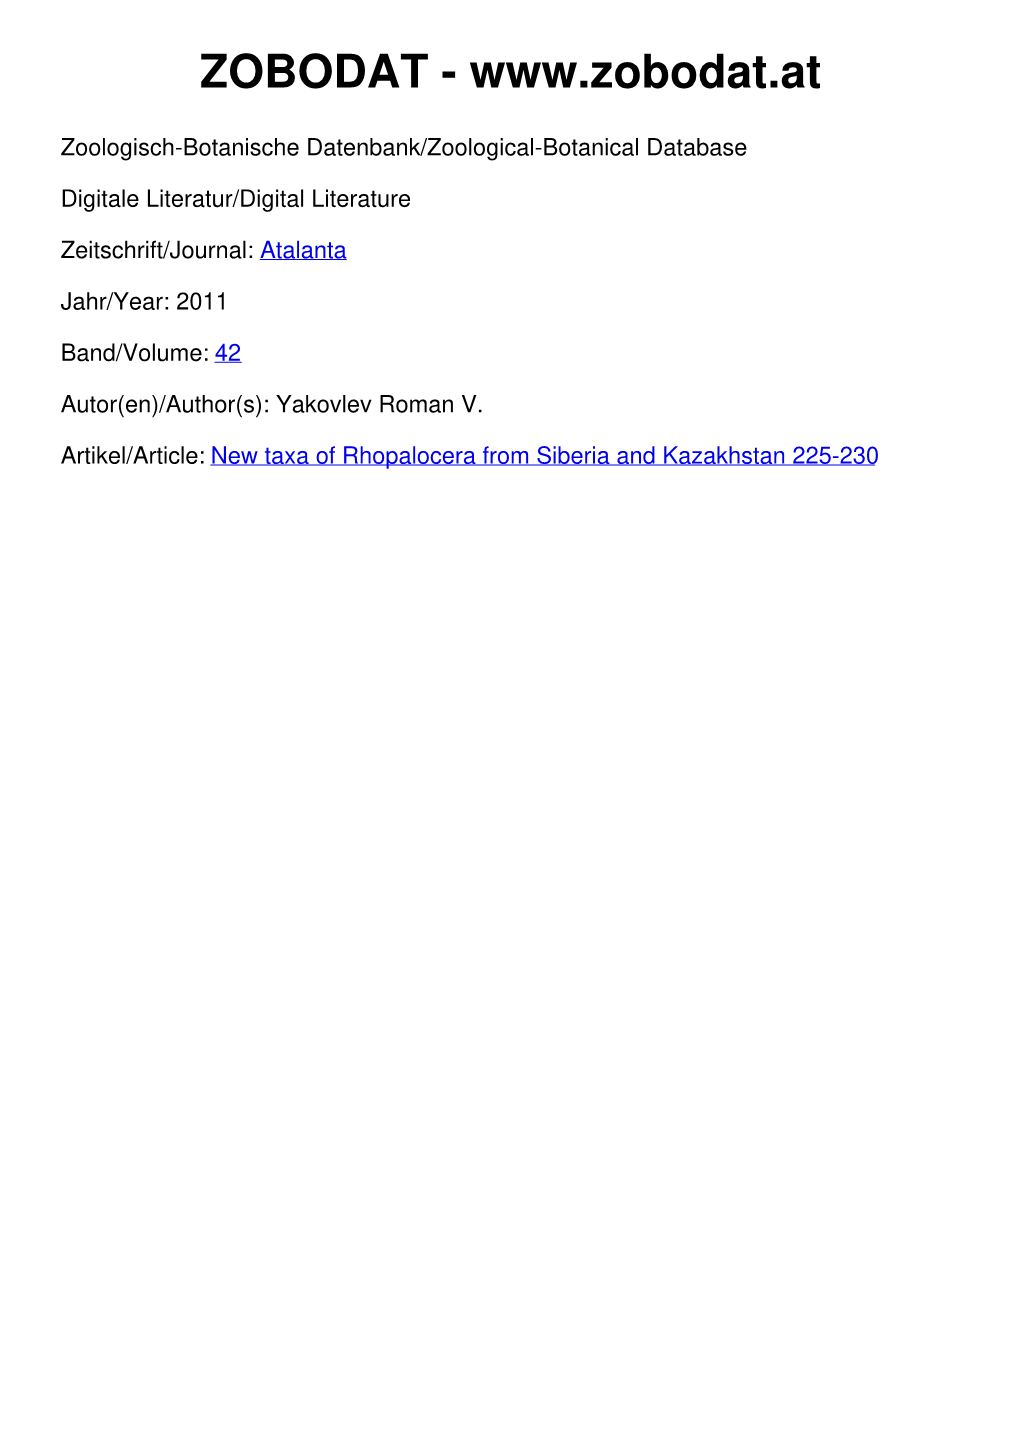 New Taxa of Rhopalocera from Siberia and Kazakhstan 225-230 Atalanta 42 (1-4): 225-230, Würzburg (2011), ISSN 0171-0079